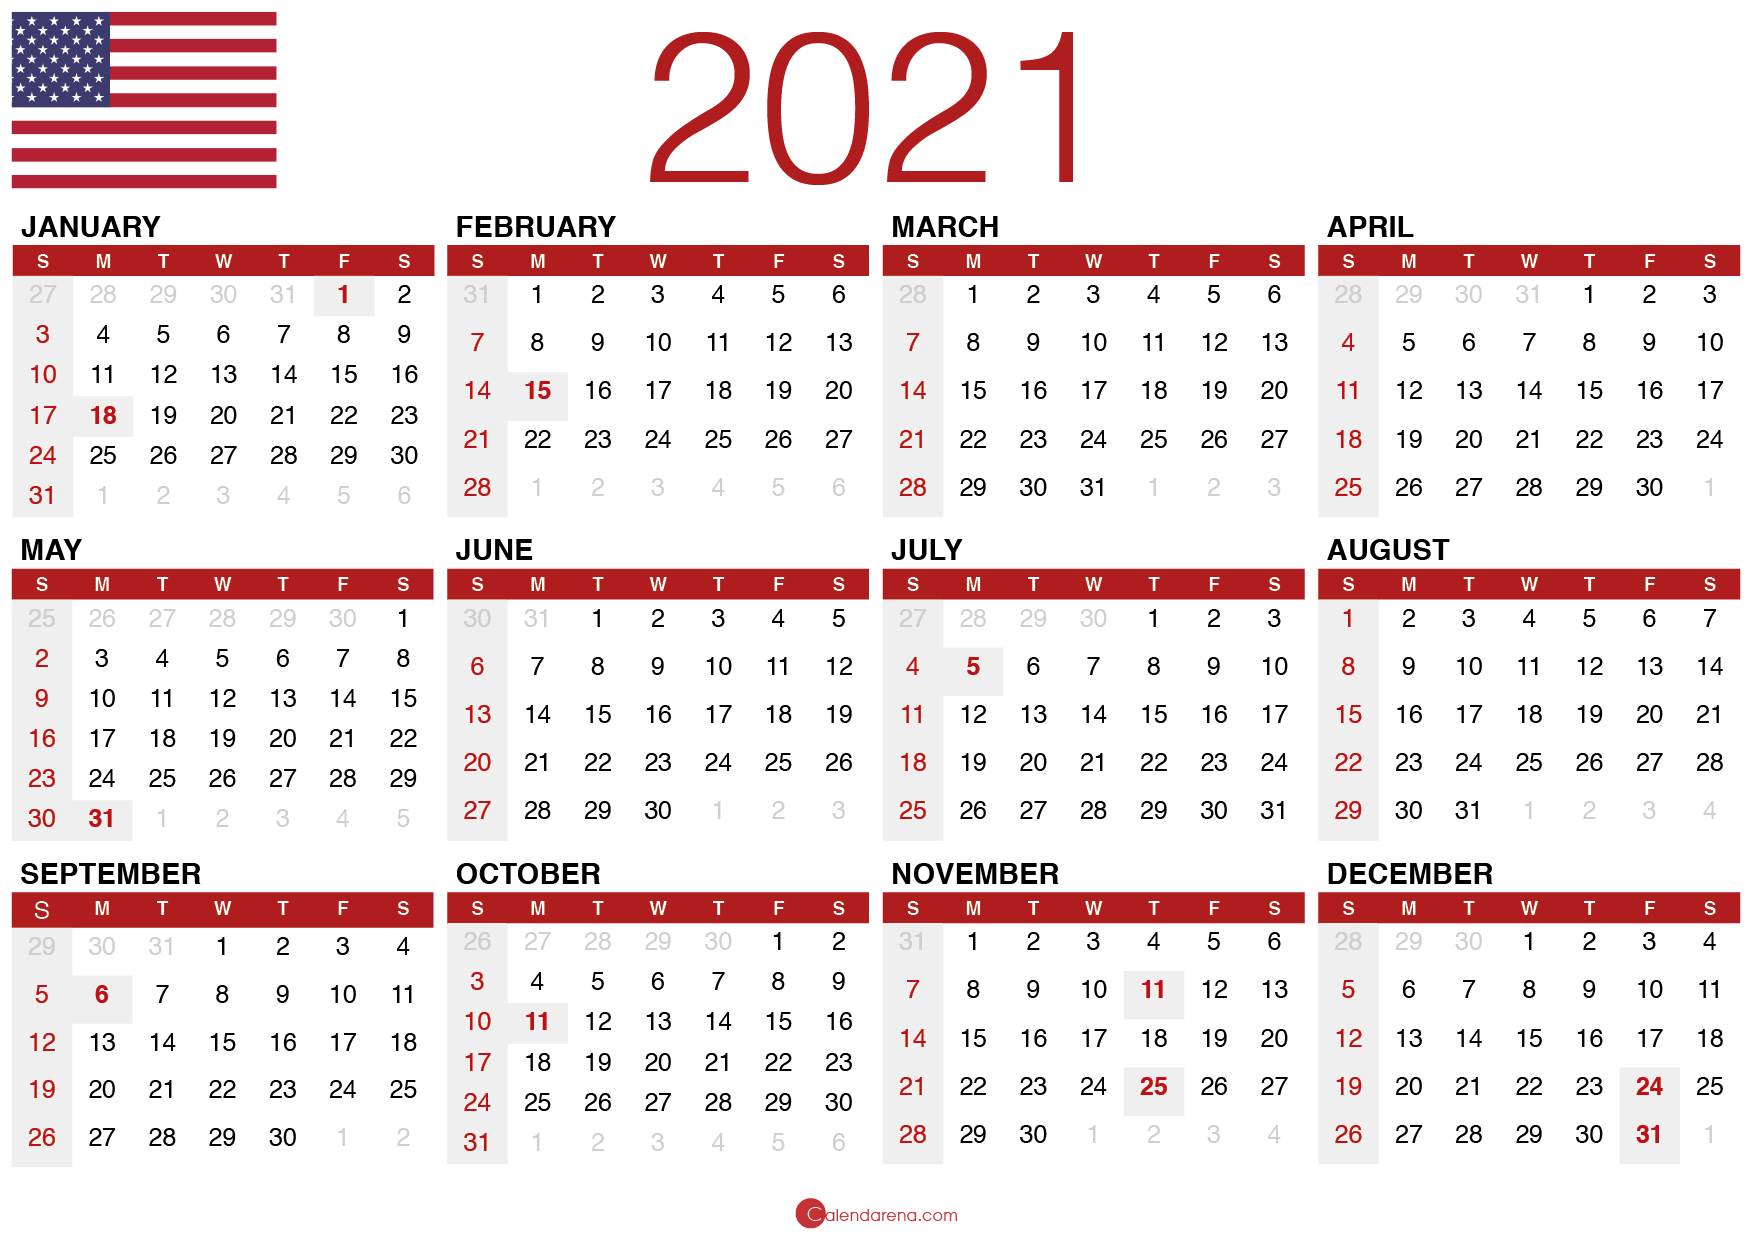 Download Free Printable Calendar 2021 ??-Printable Free 2021 Calendar Without Downloading